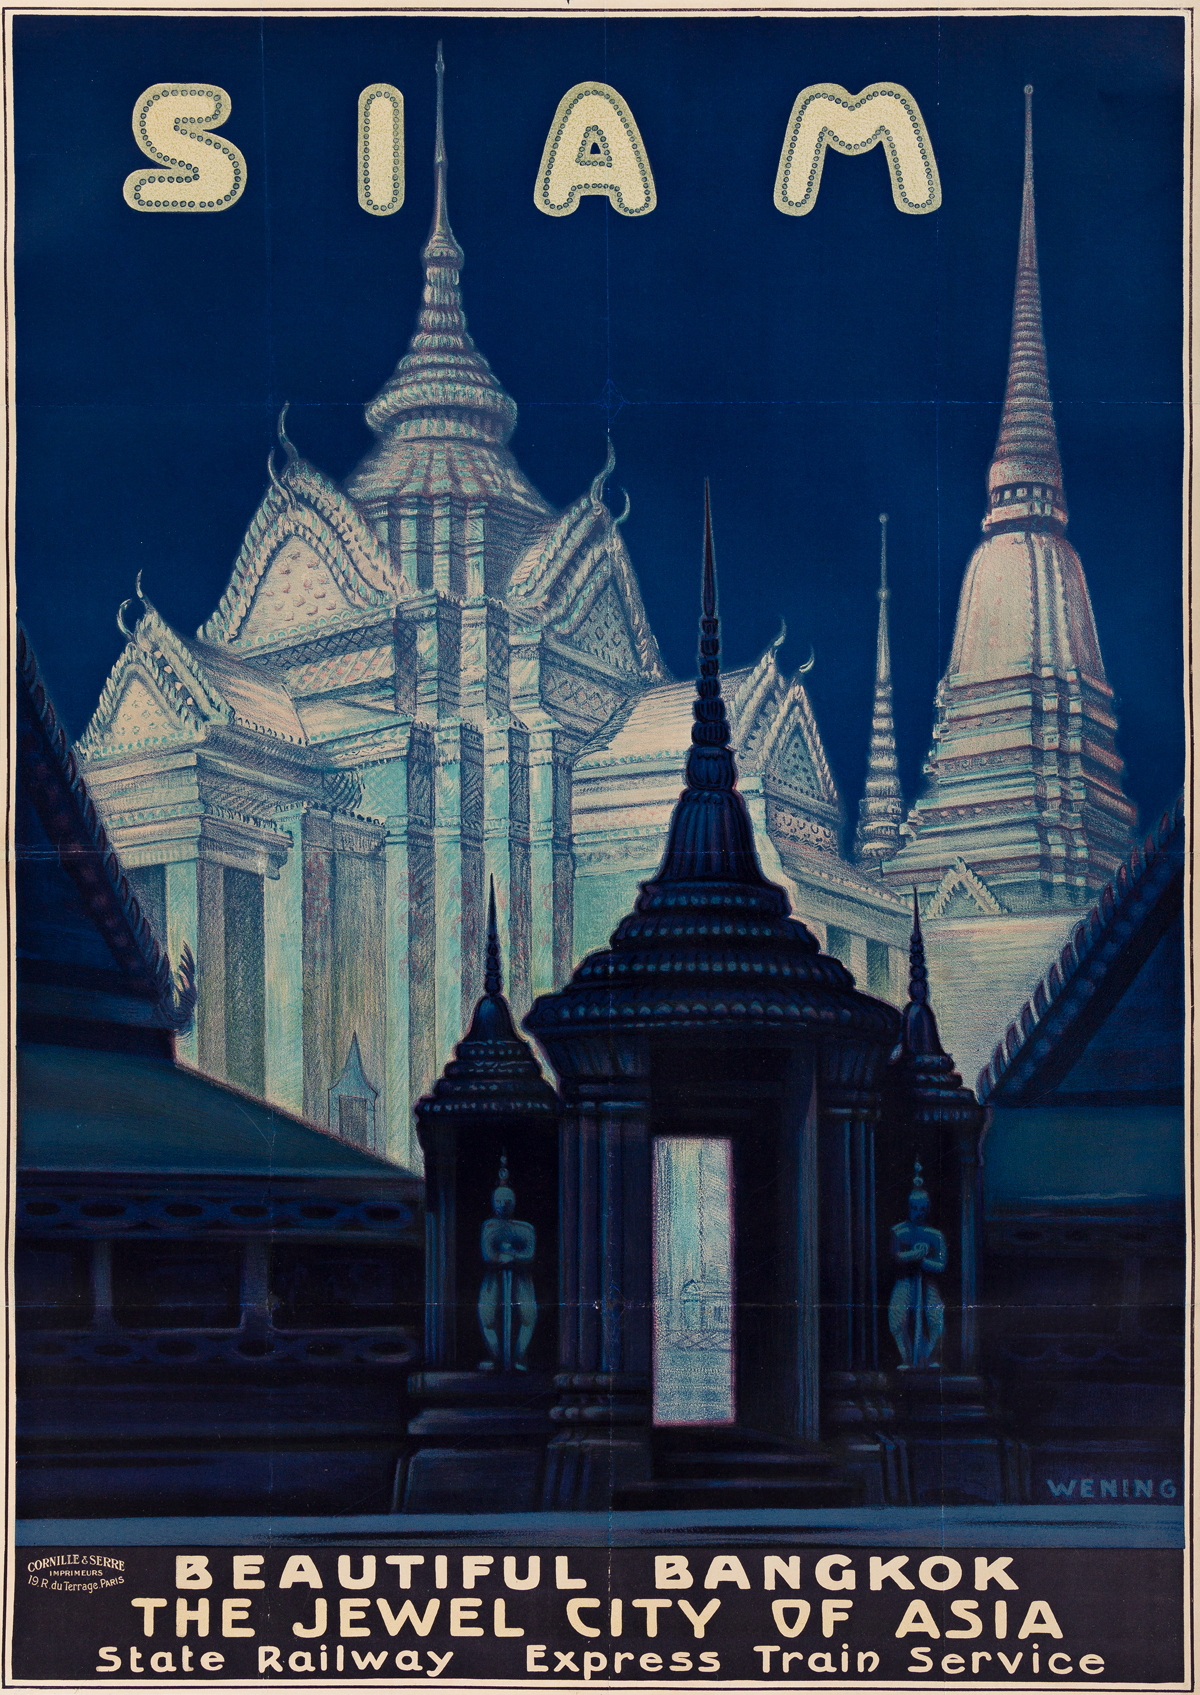 Michael Rudolf Wening (1893-1970).  SIAM / BEAUTIFUL BANGKOK / THE JEWEL CITY OF ASIA. Circa 1920s.